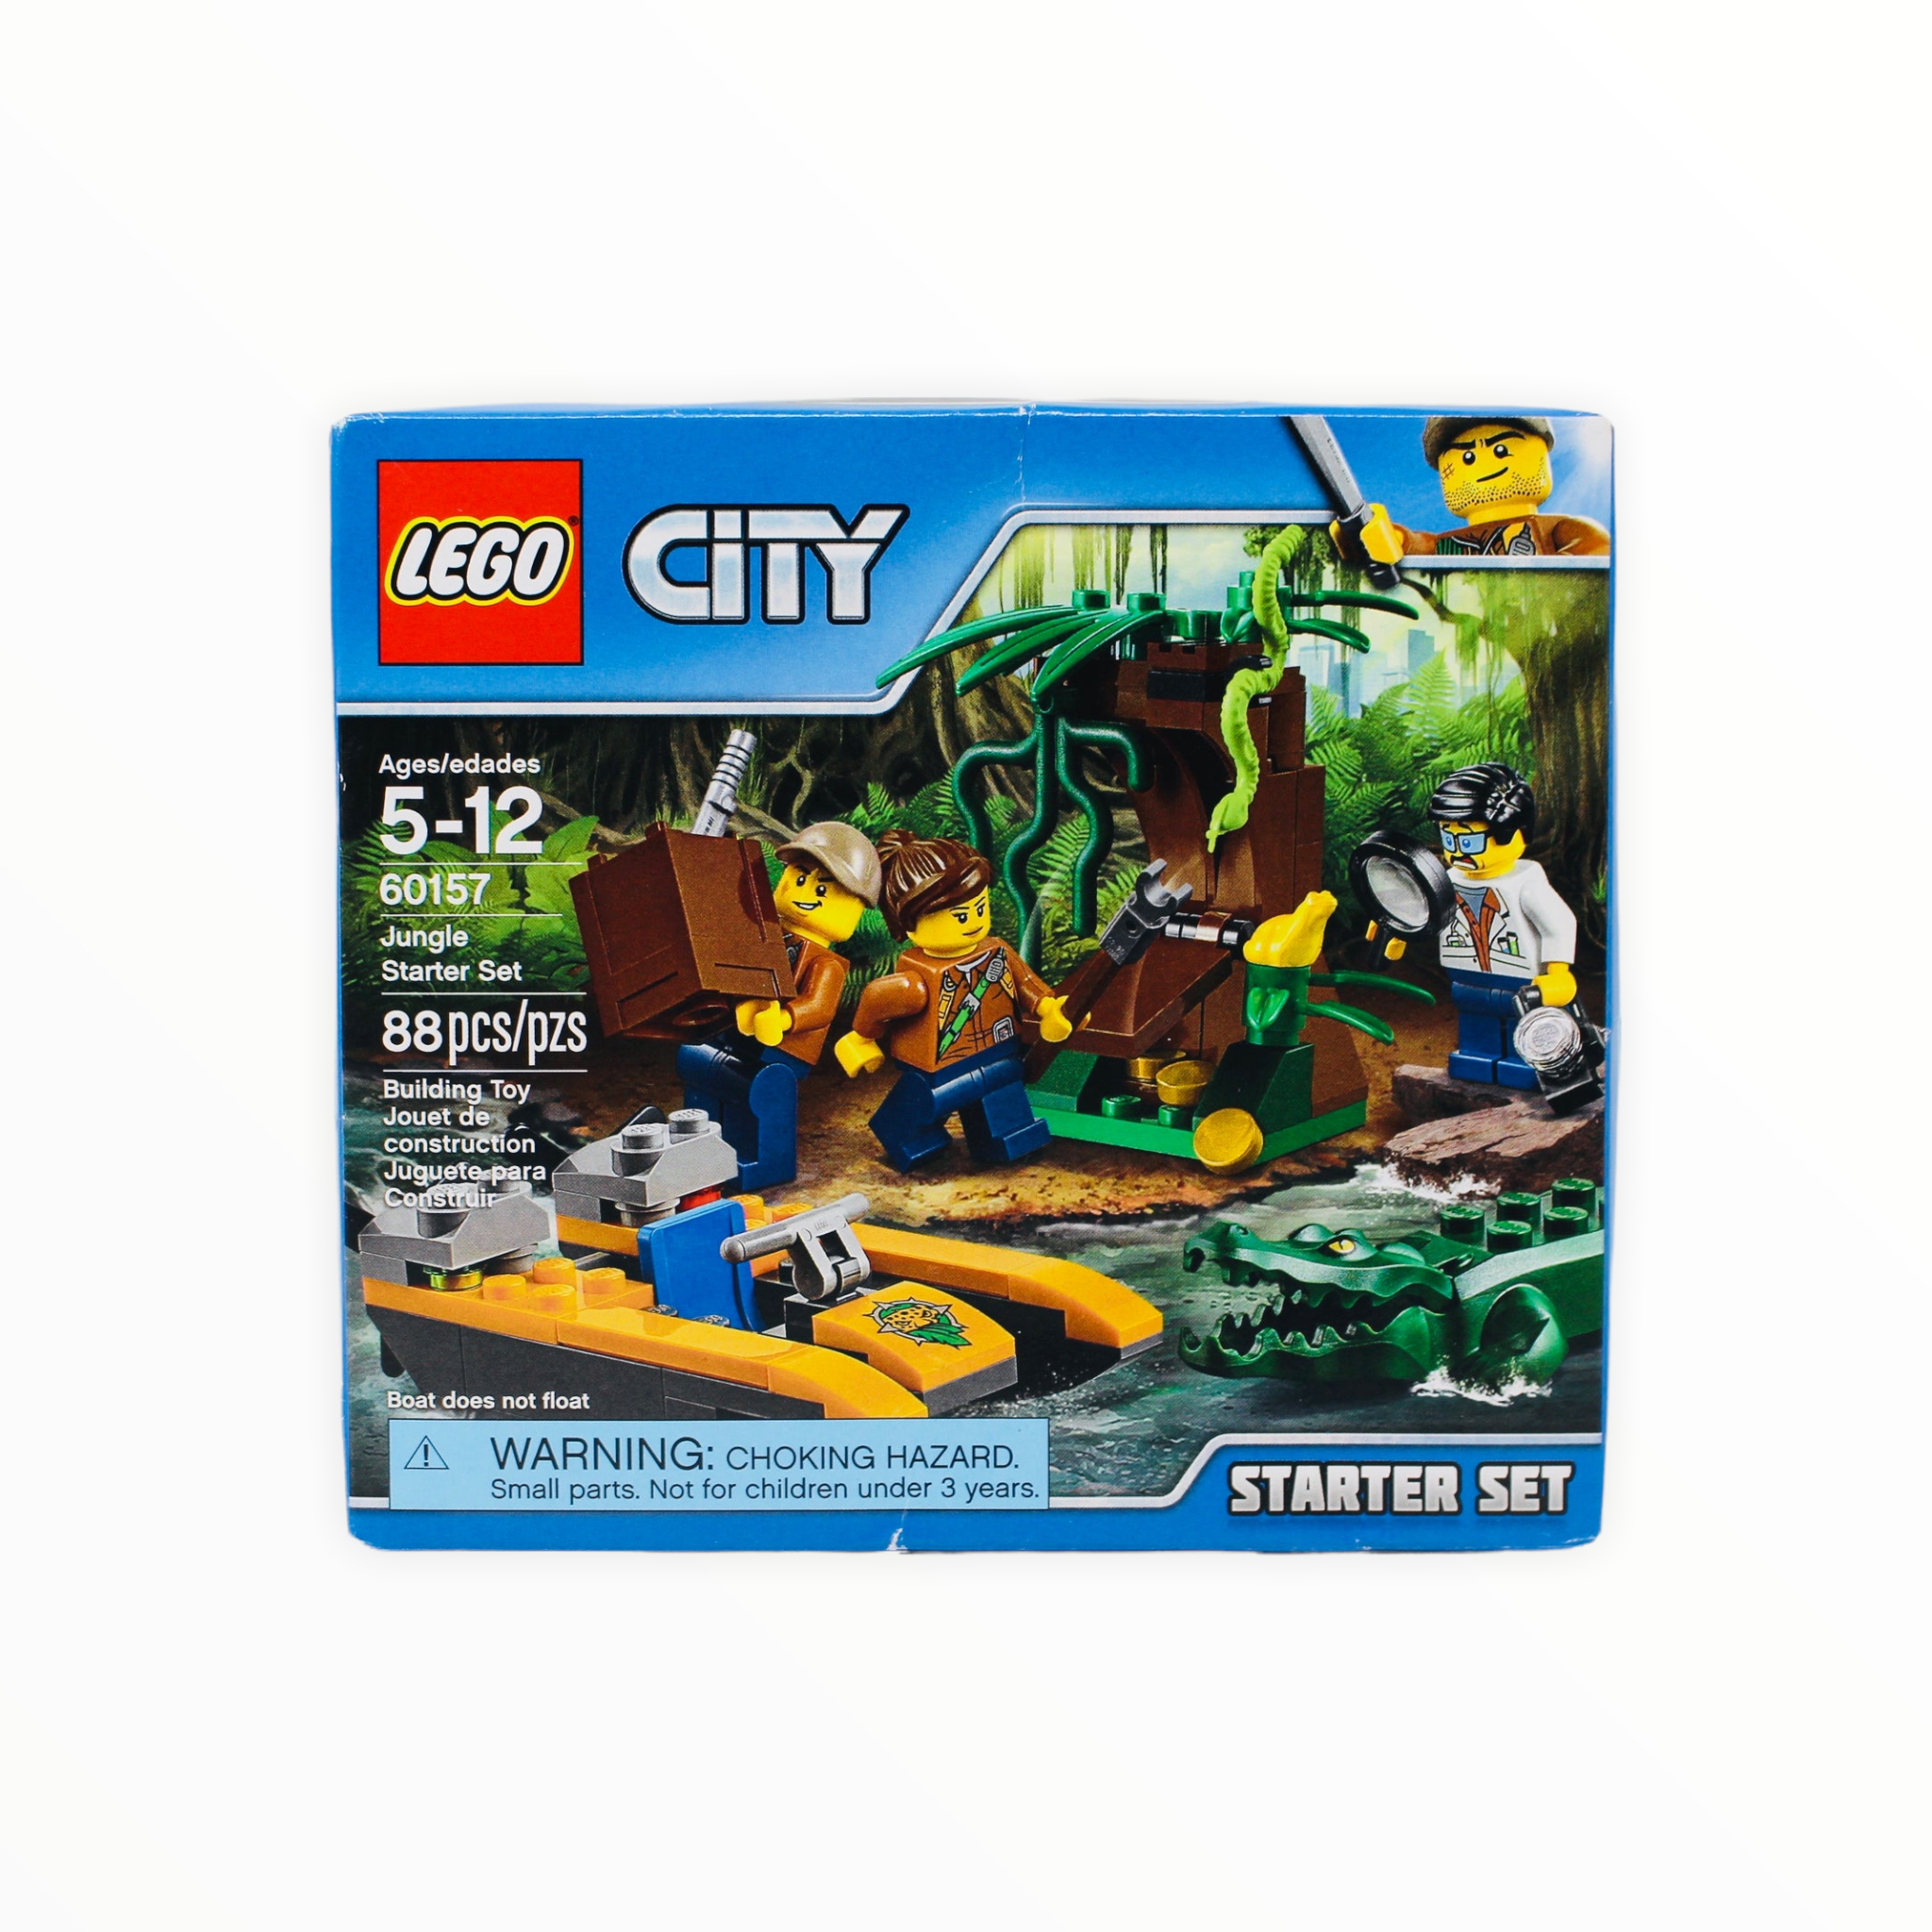 Retired Set 60157 City Jungle Starter Set